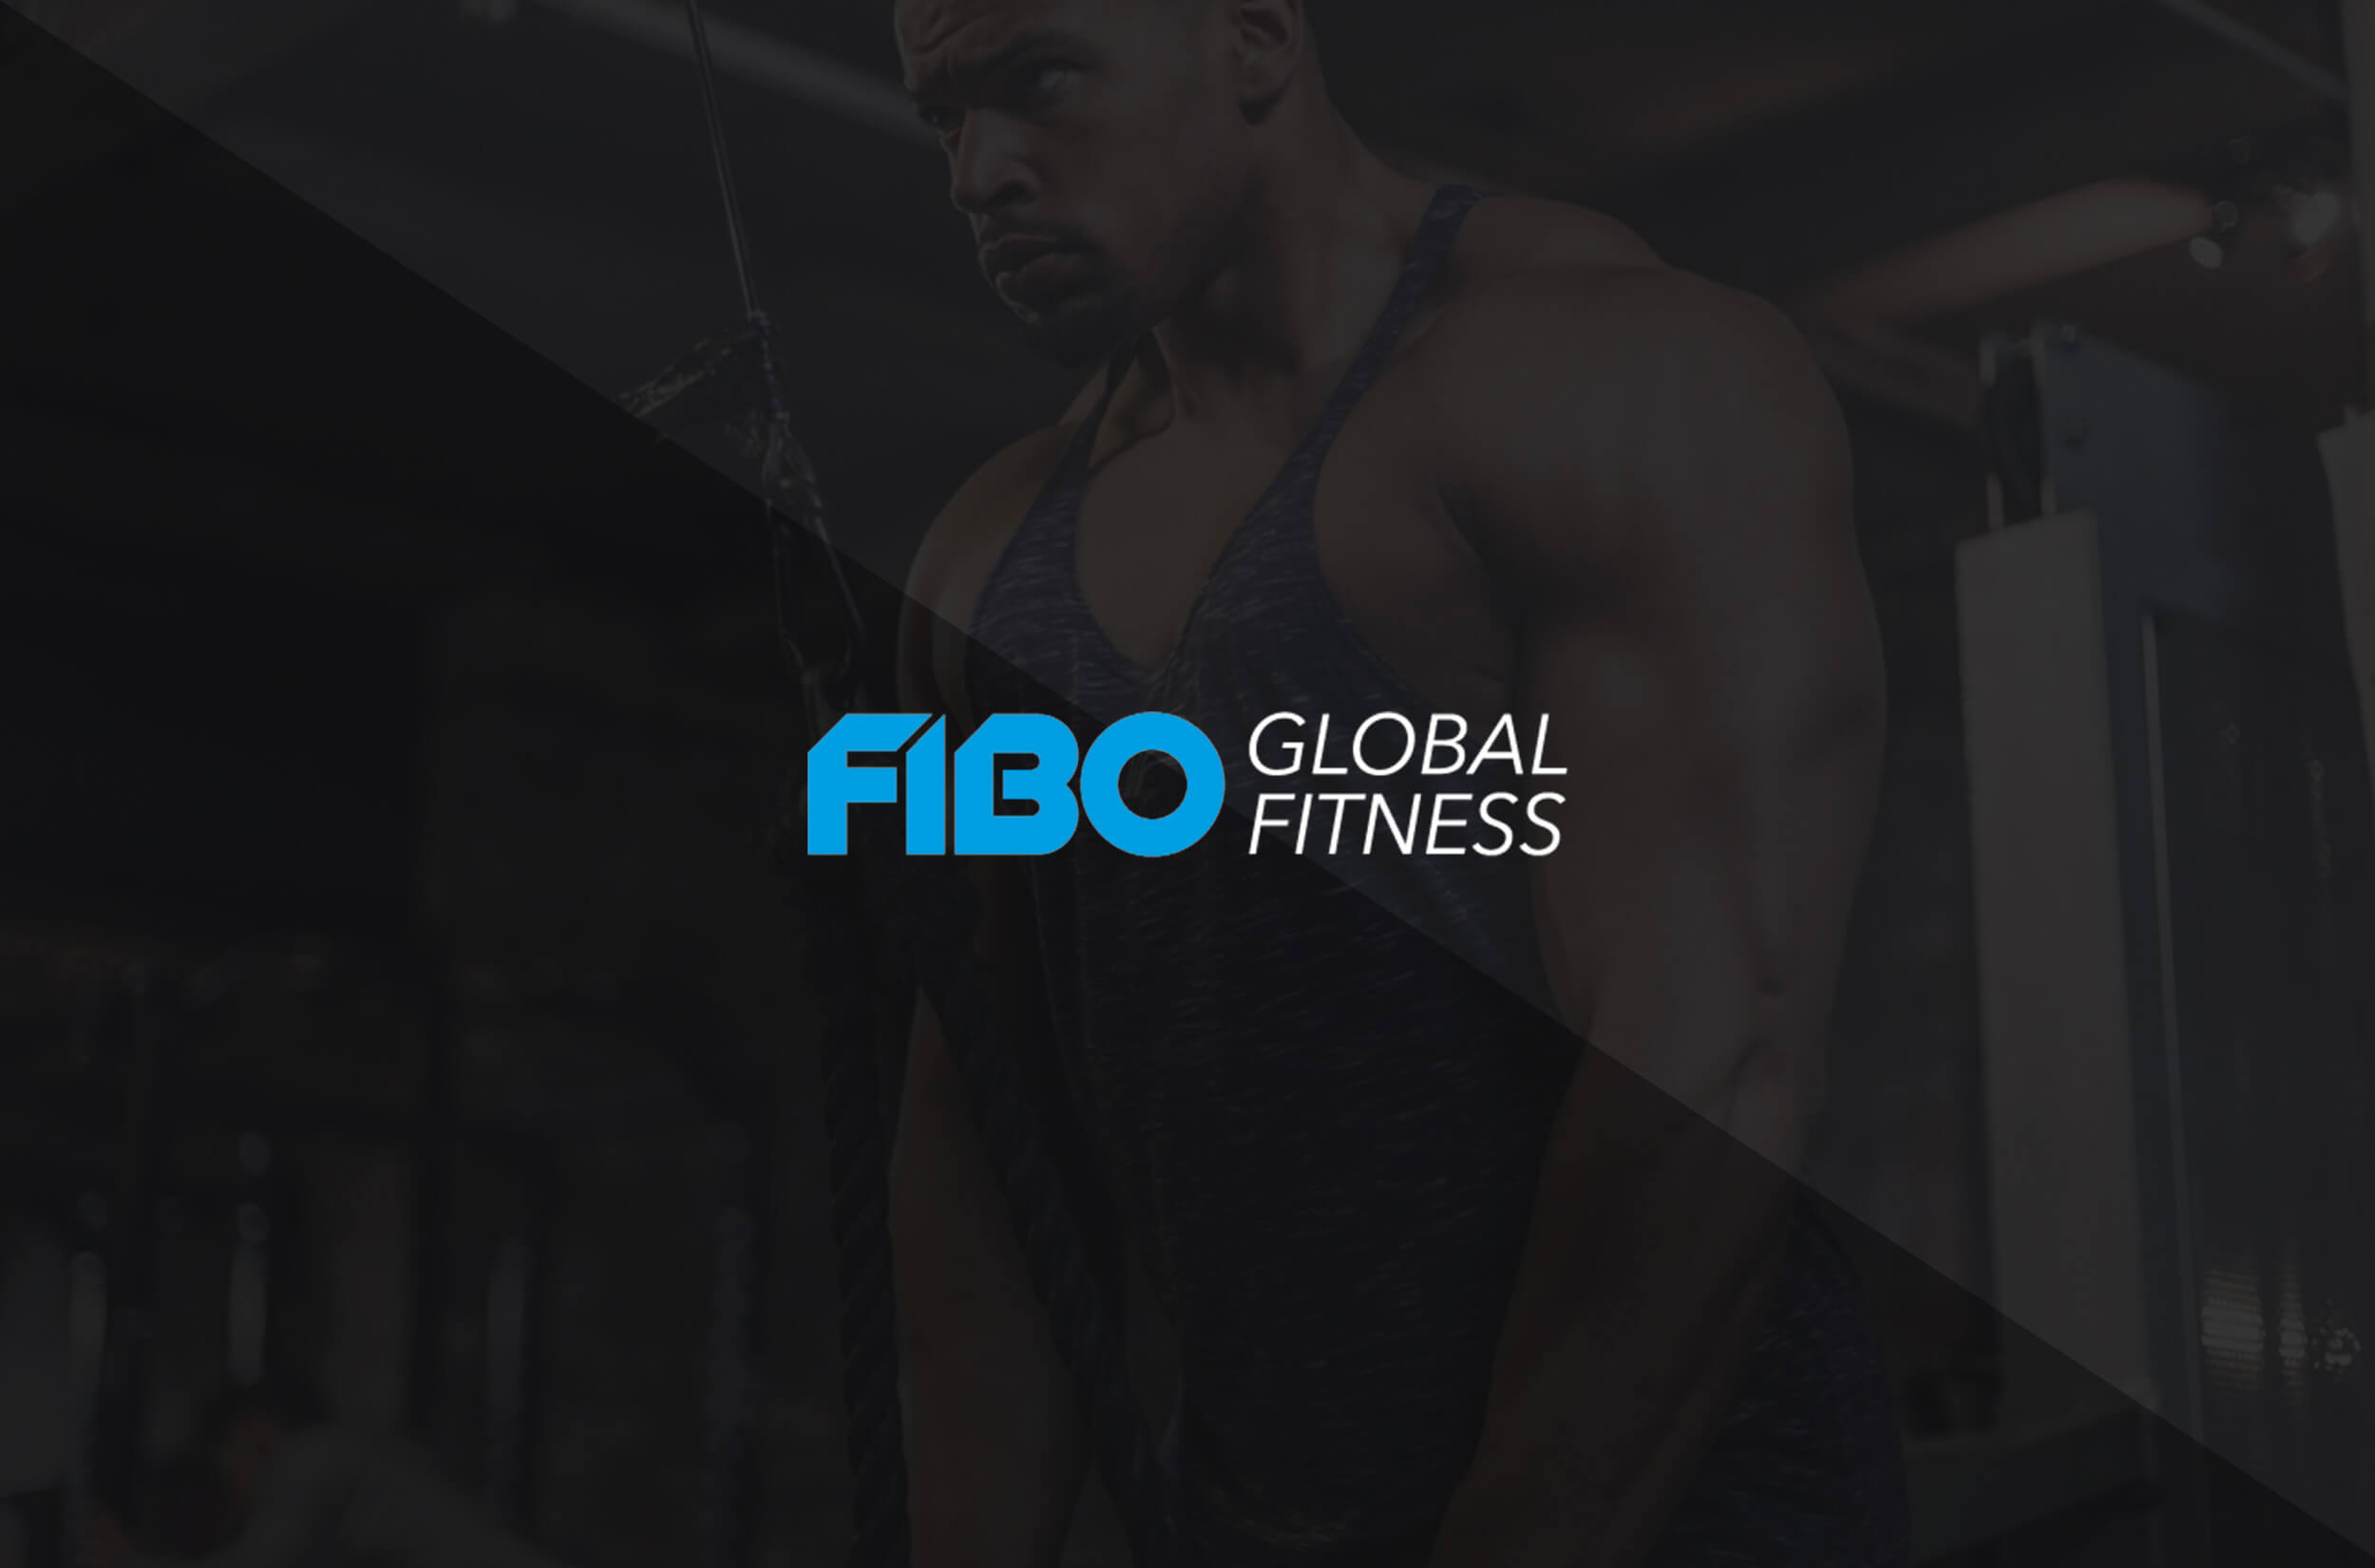 Pursue Fitness Comes To FIBO!